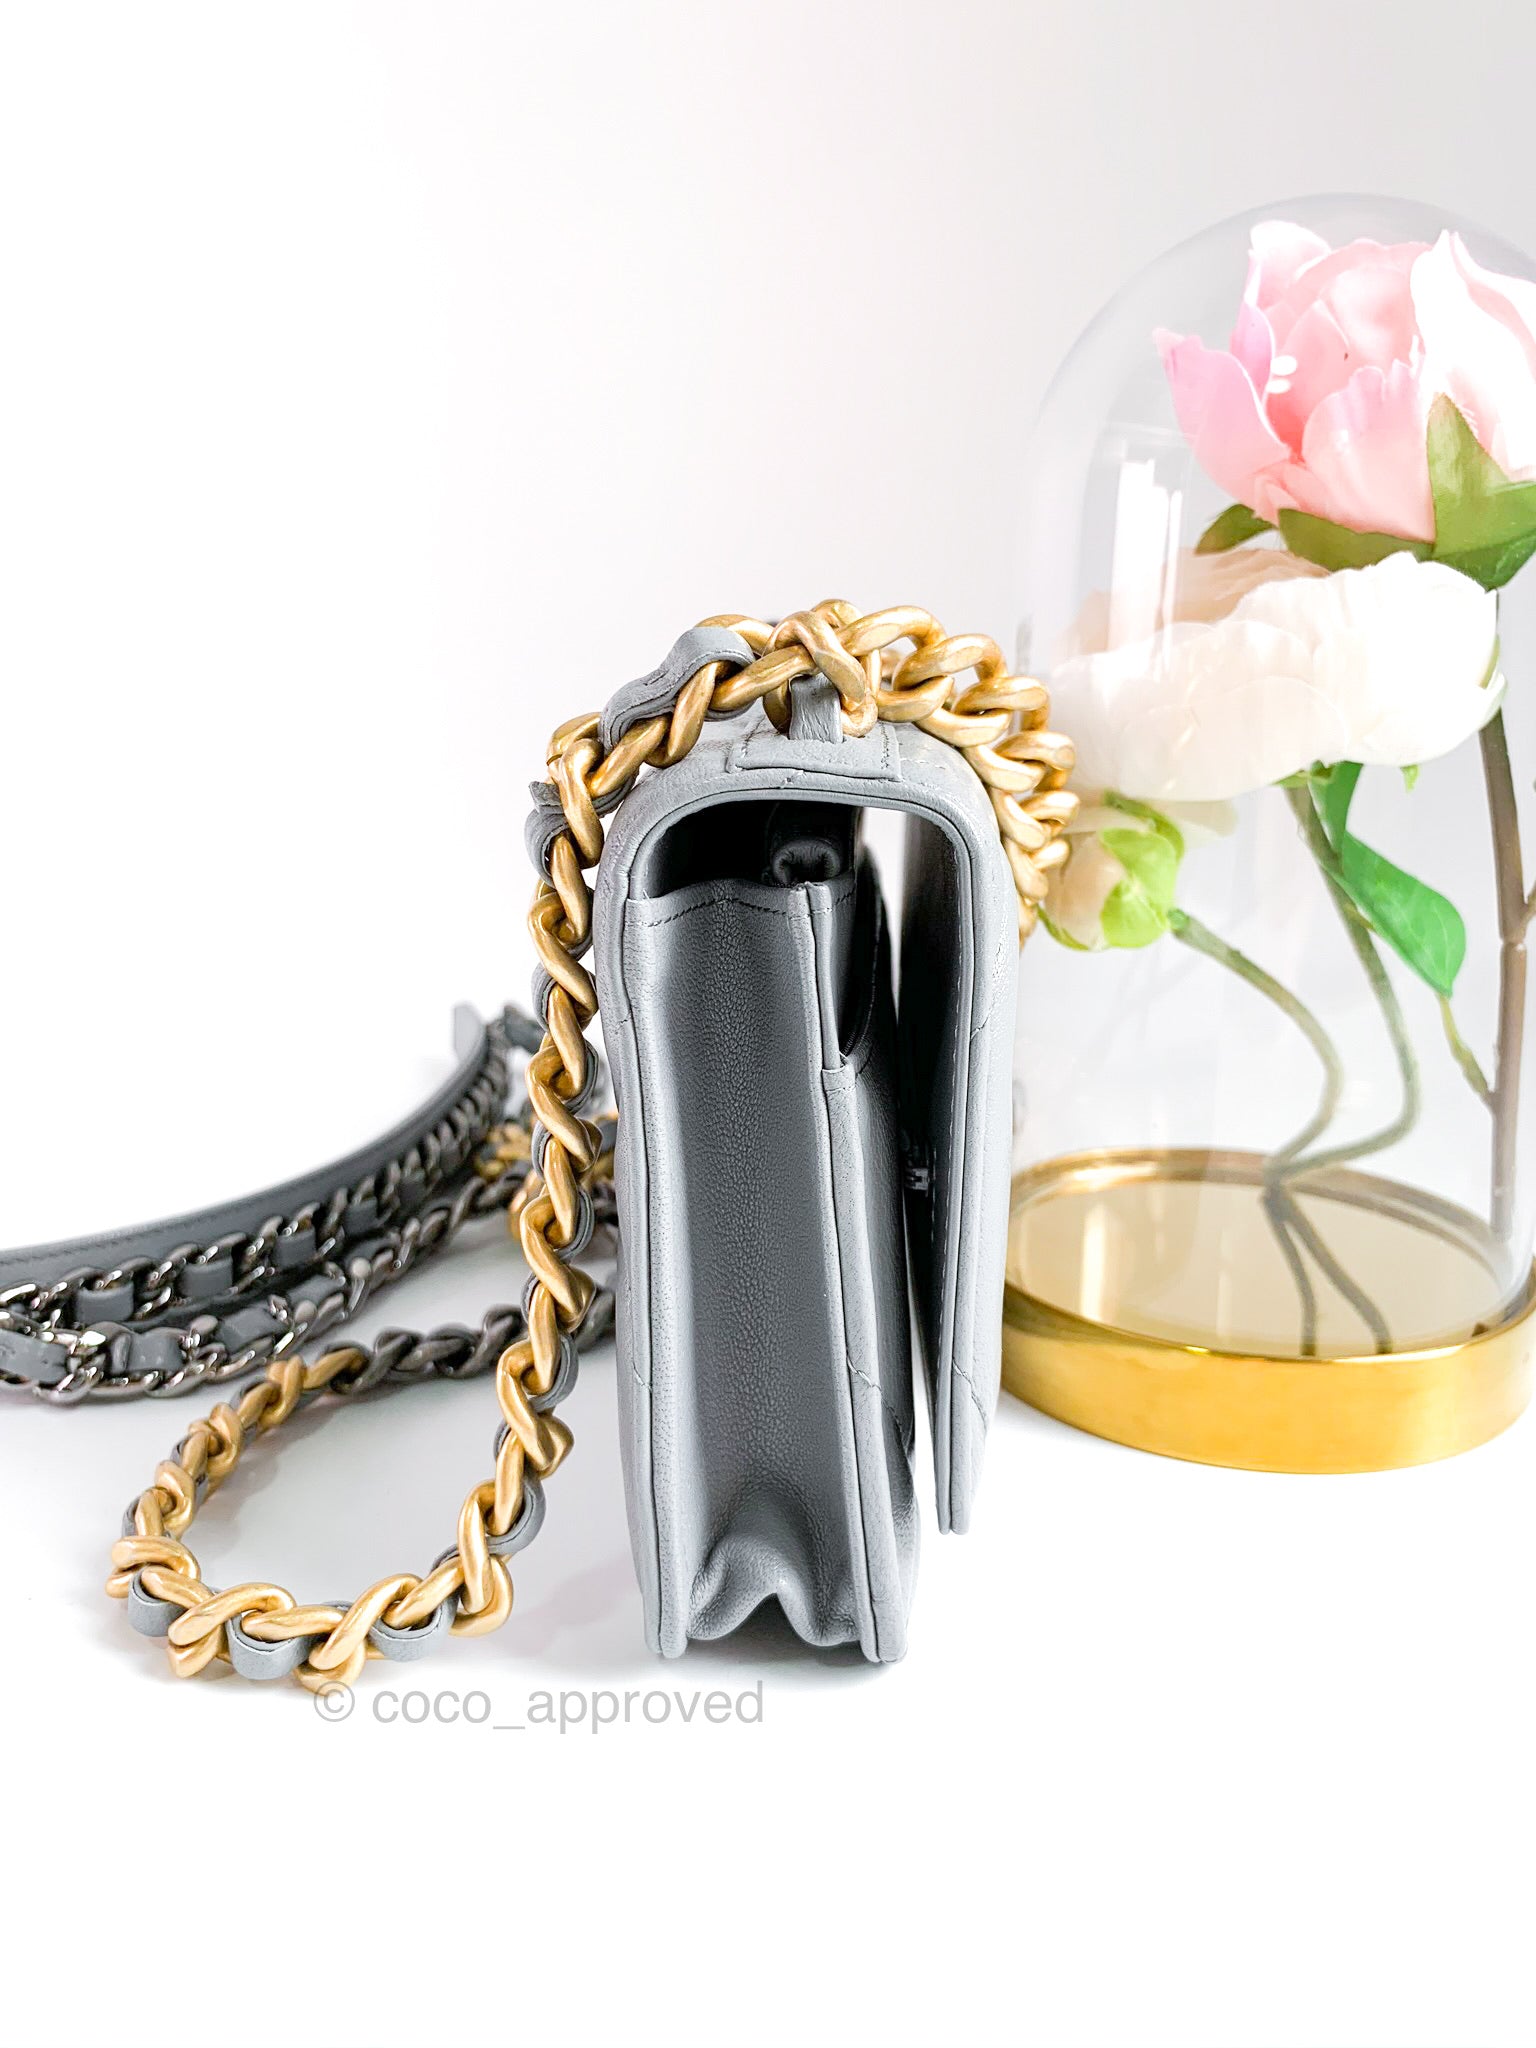 Chanel Silver Metallic Leather Cc Chain Strap Phone Case